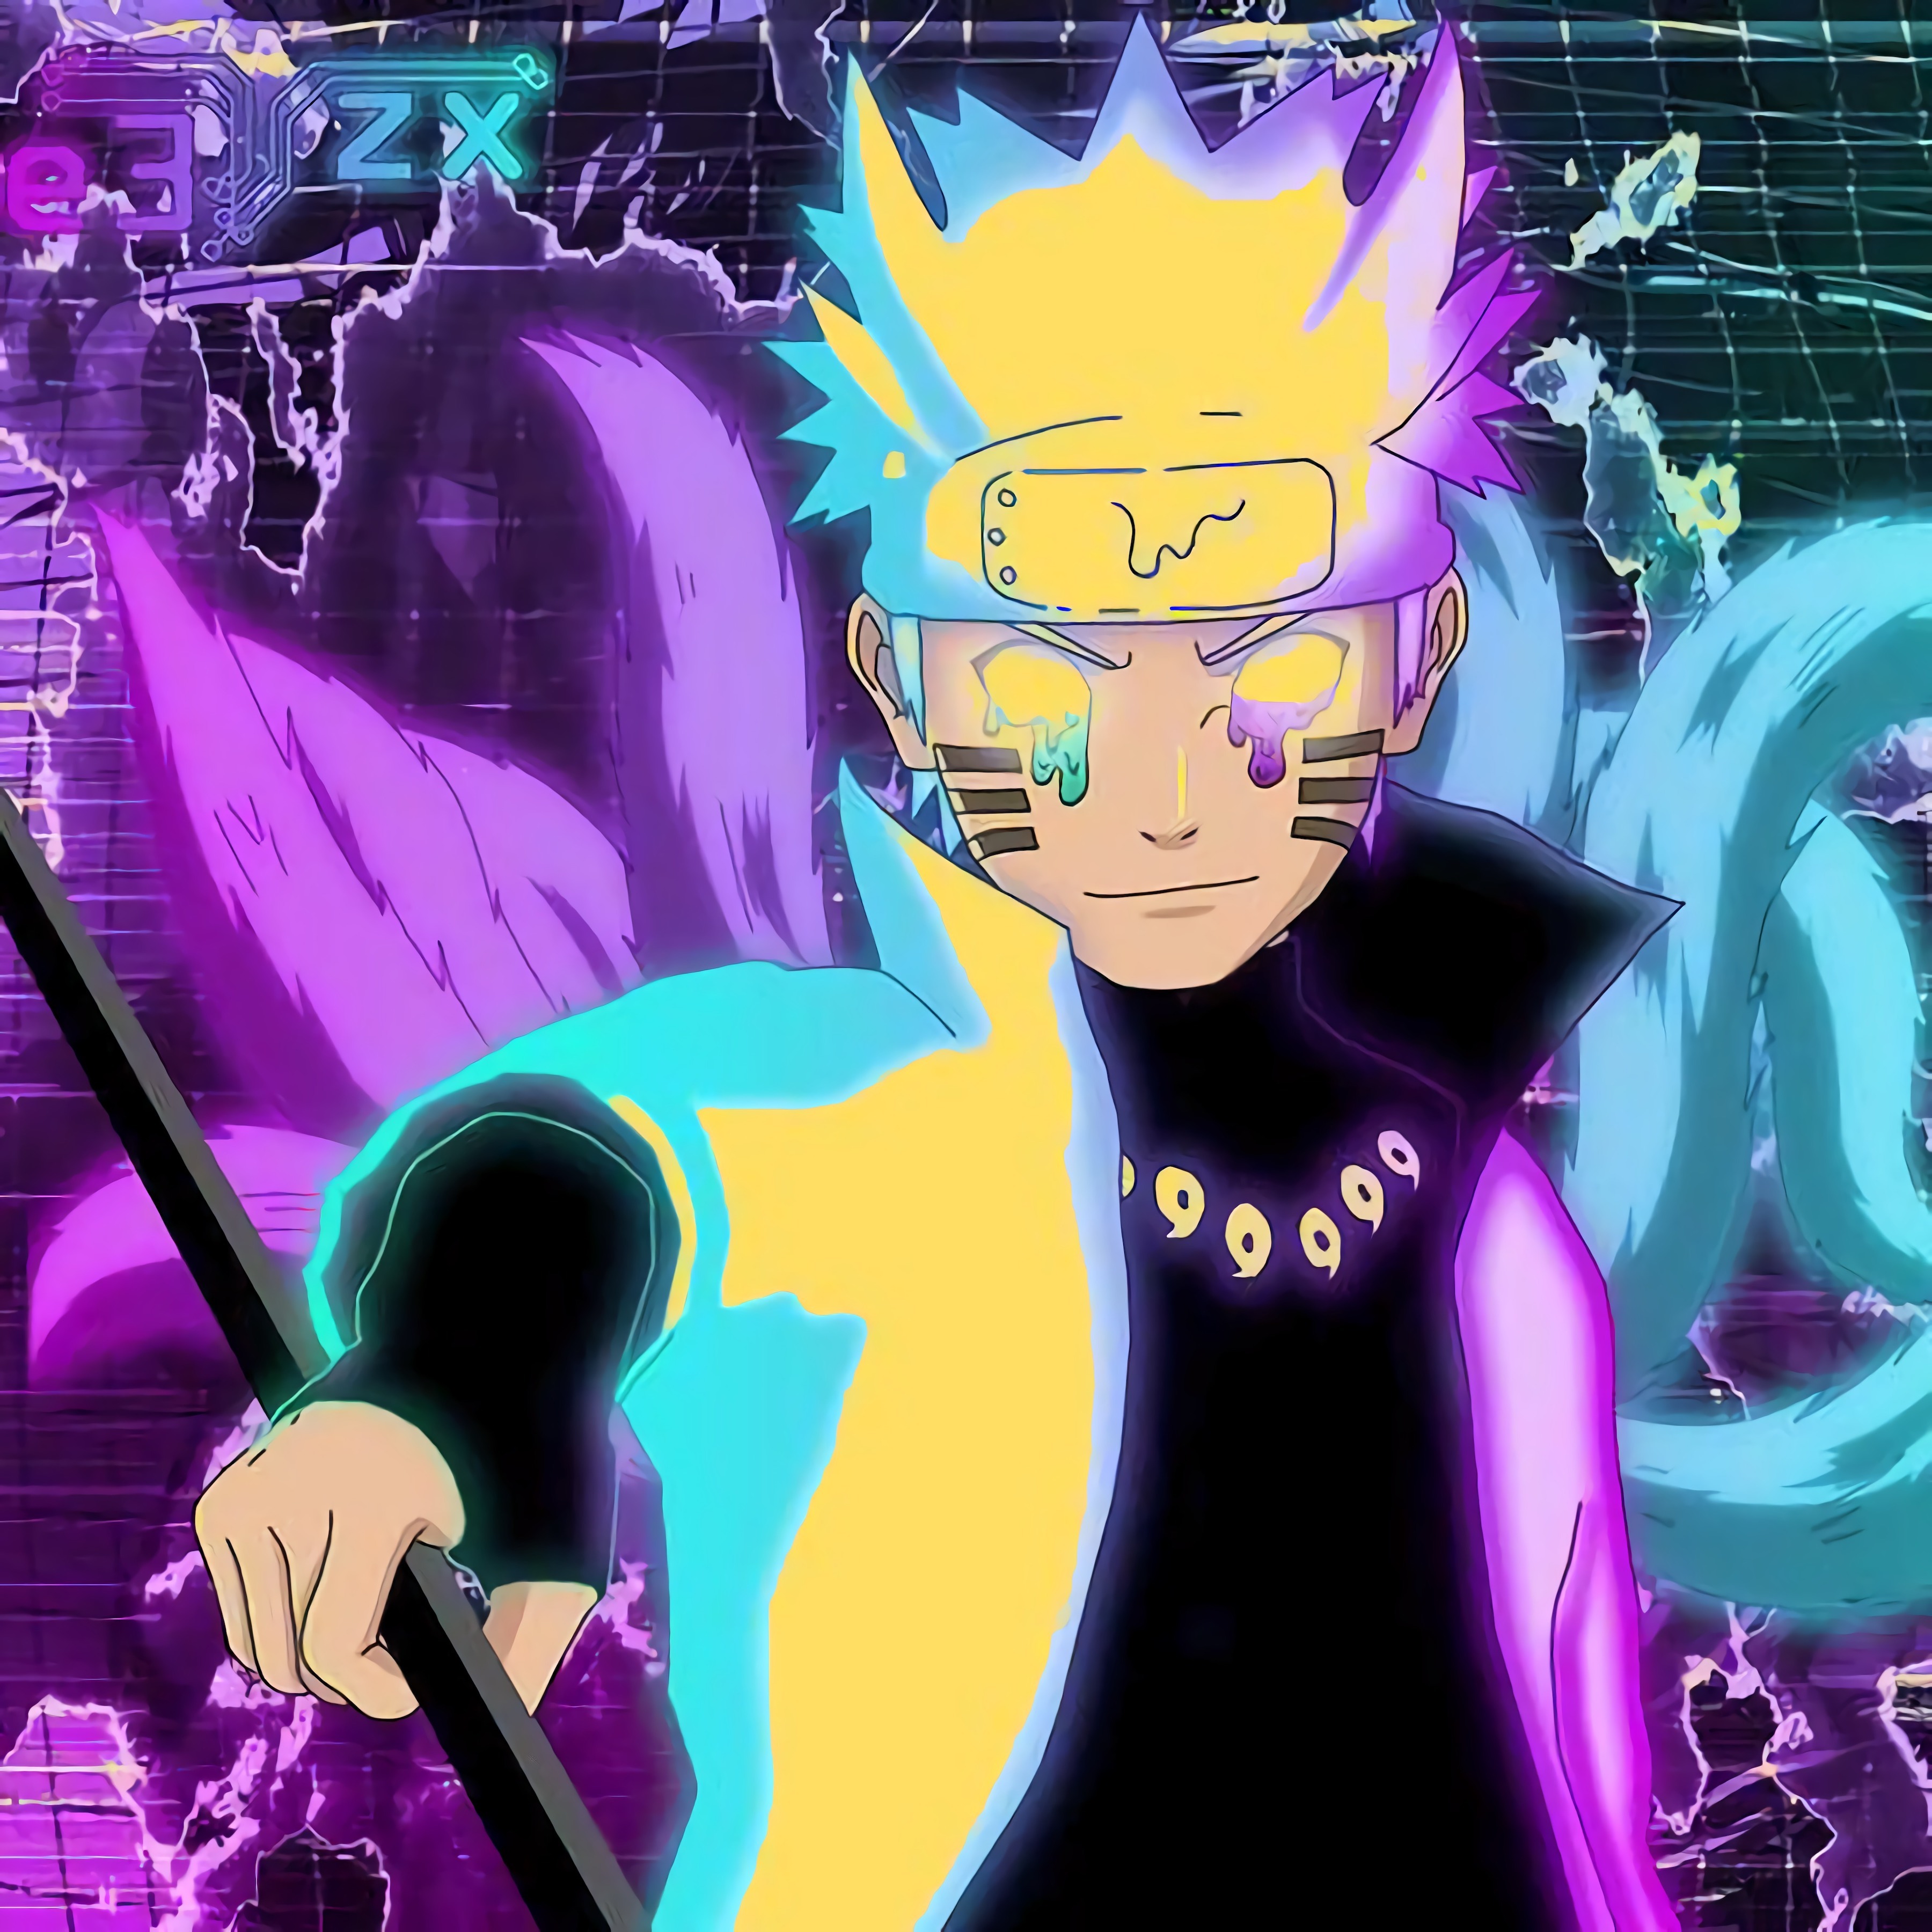 Imposter Naruto Hero - Jogue gratuitamente na Friv5